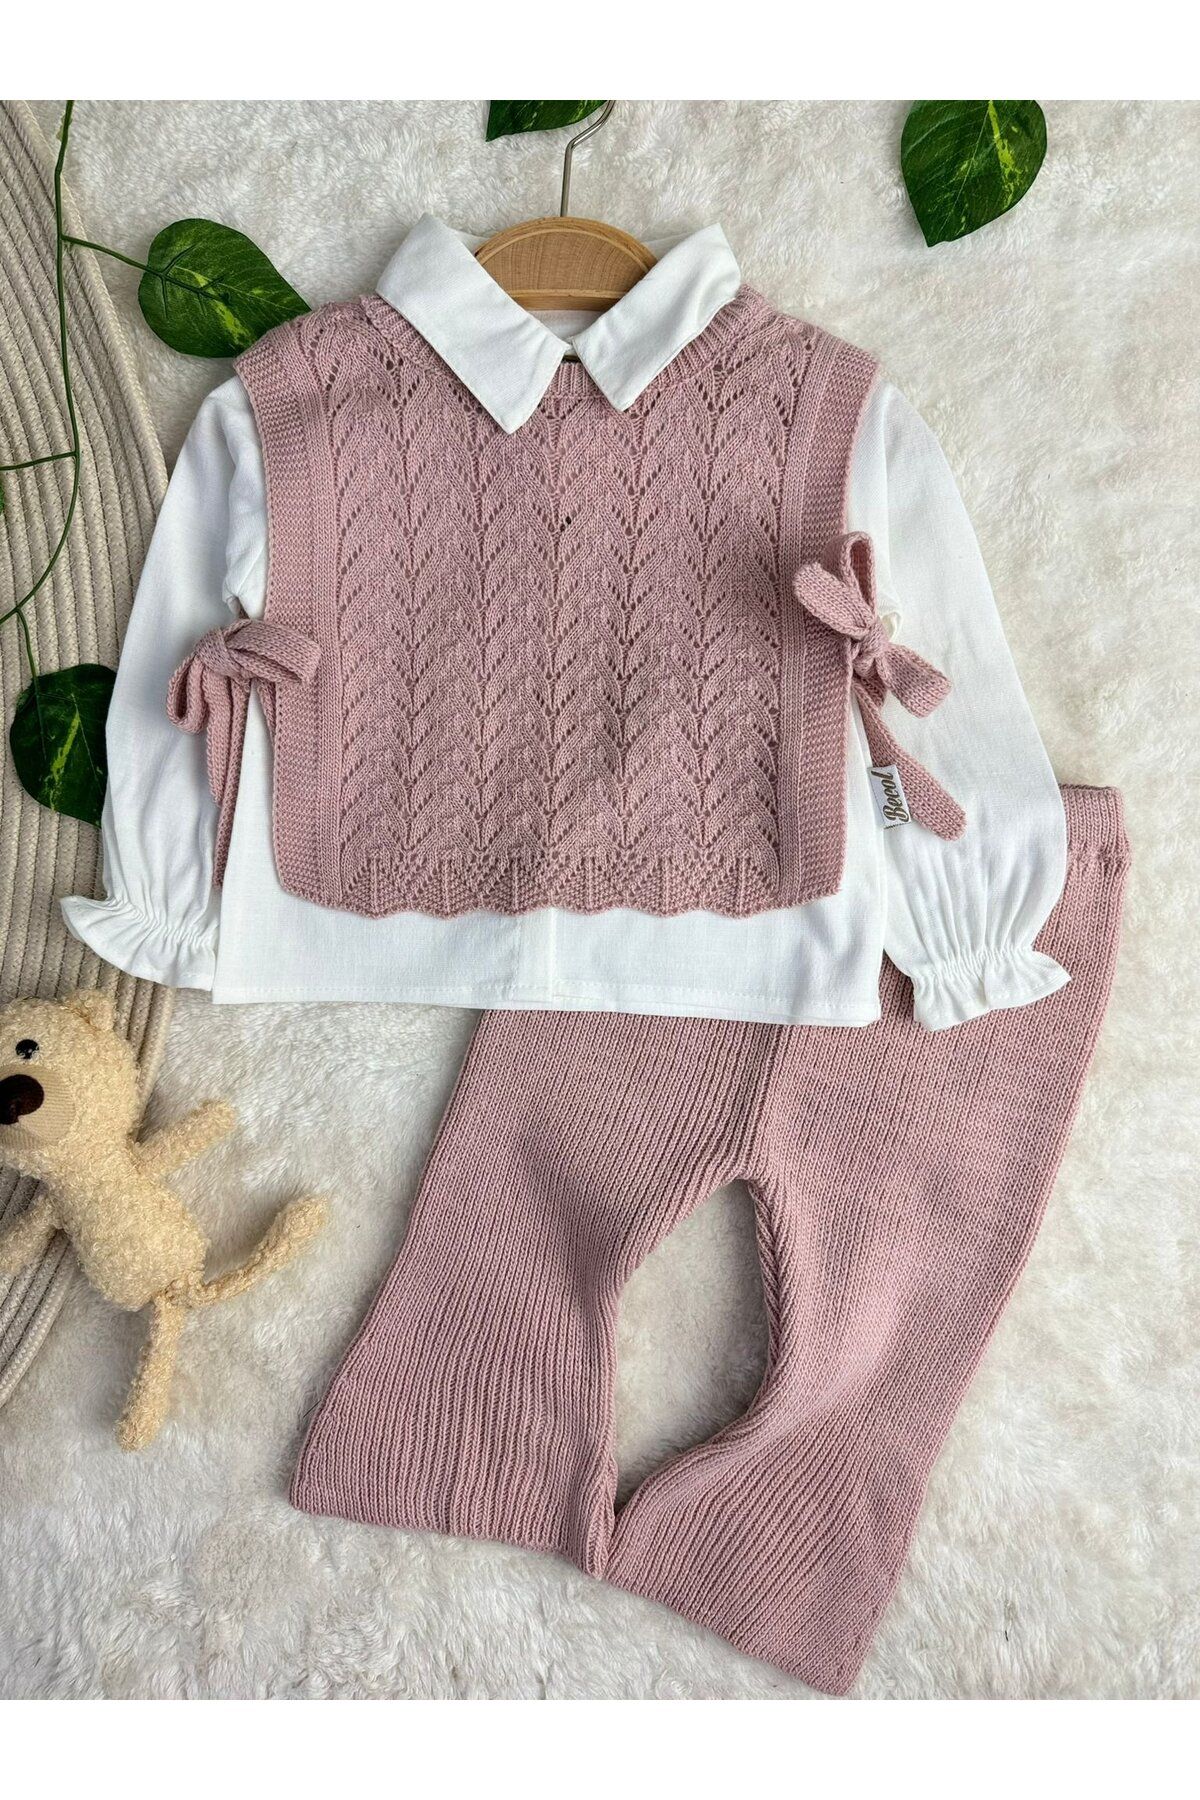 Minizade Amelia Süveterli Gömlekli 3'lü Triko Premium Kız Bebek Takım